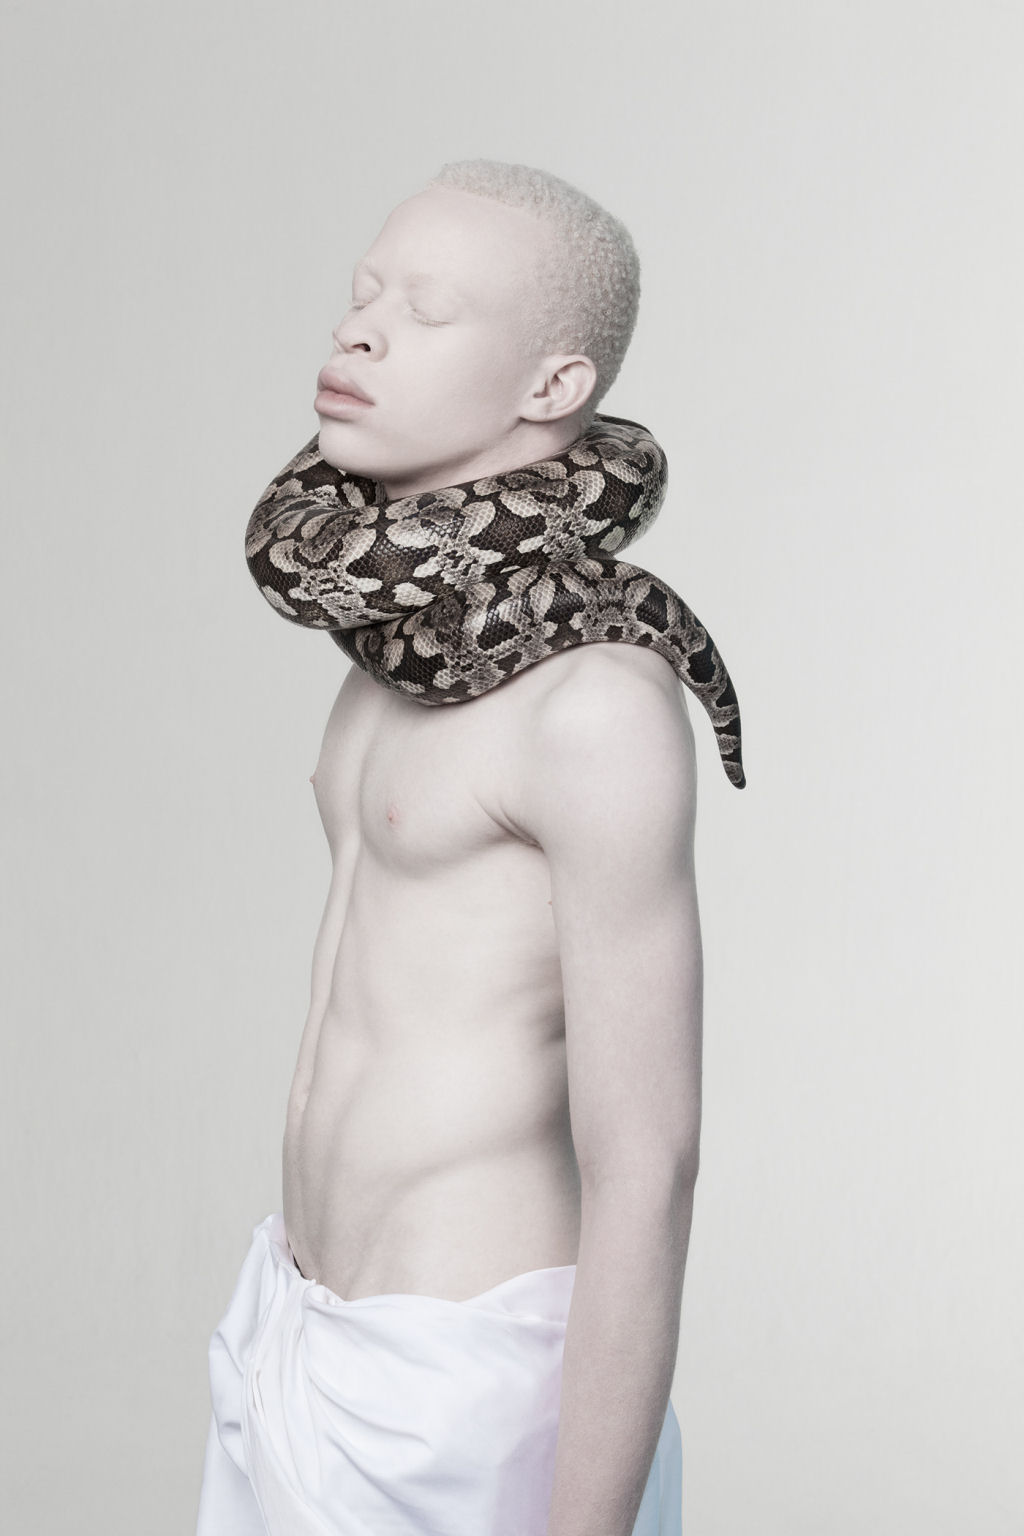 Fotgrafo desafia padres da beleza com modelos albinos 11